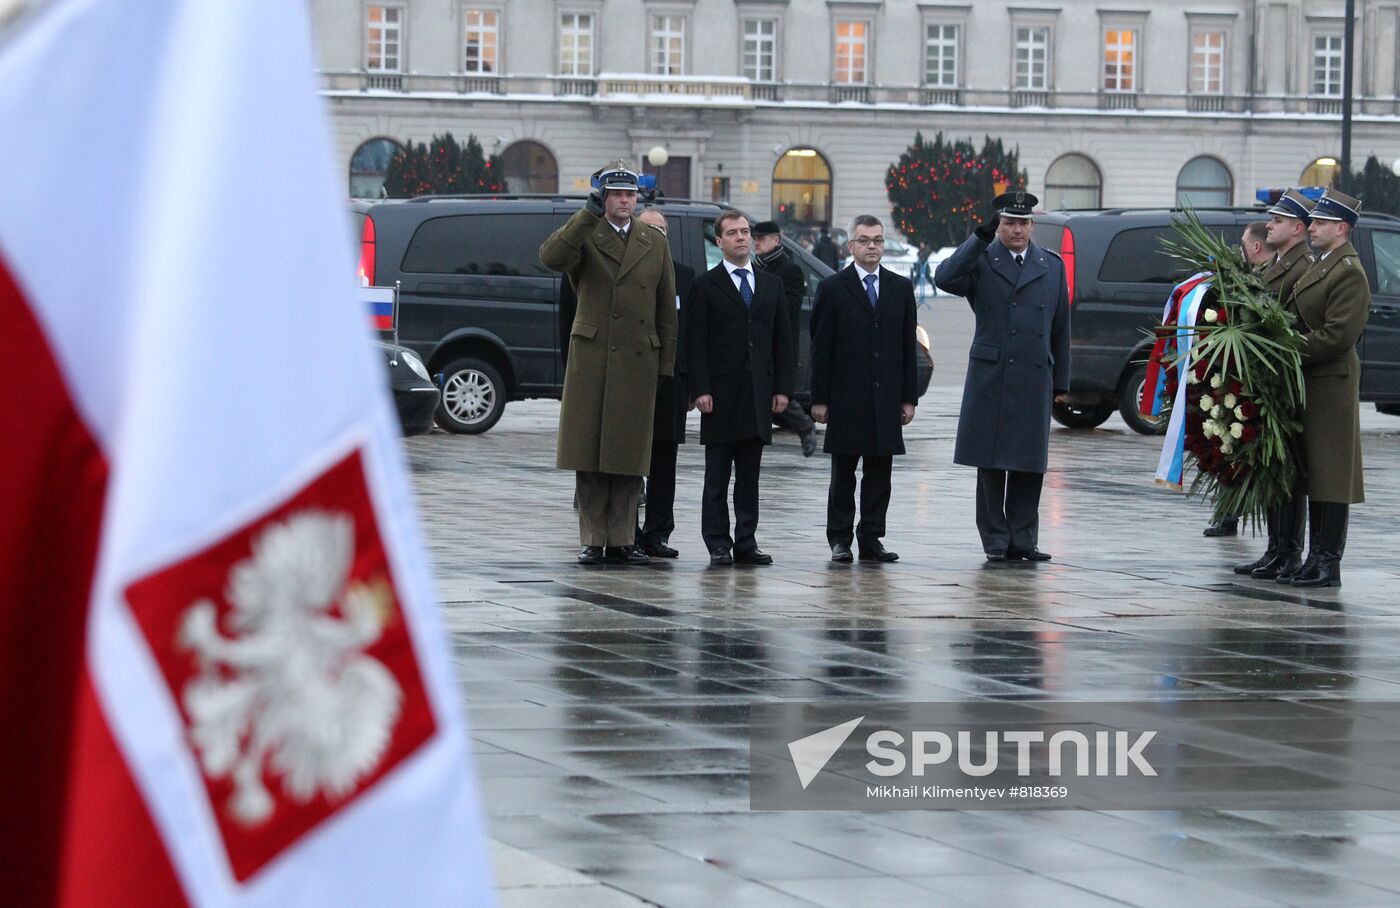 President Medvedev's official visit to Poland